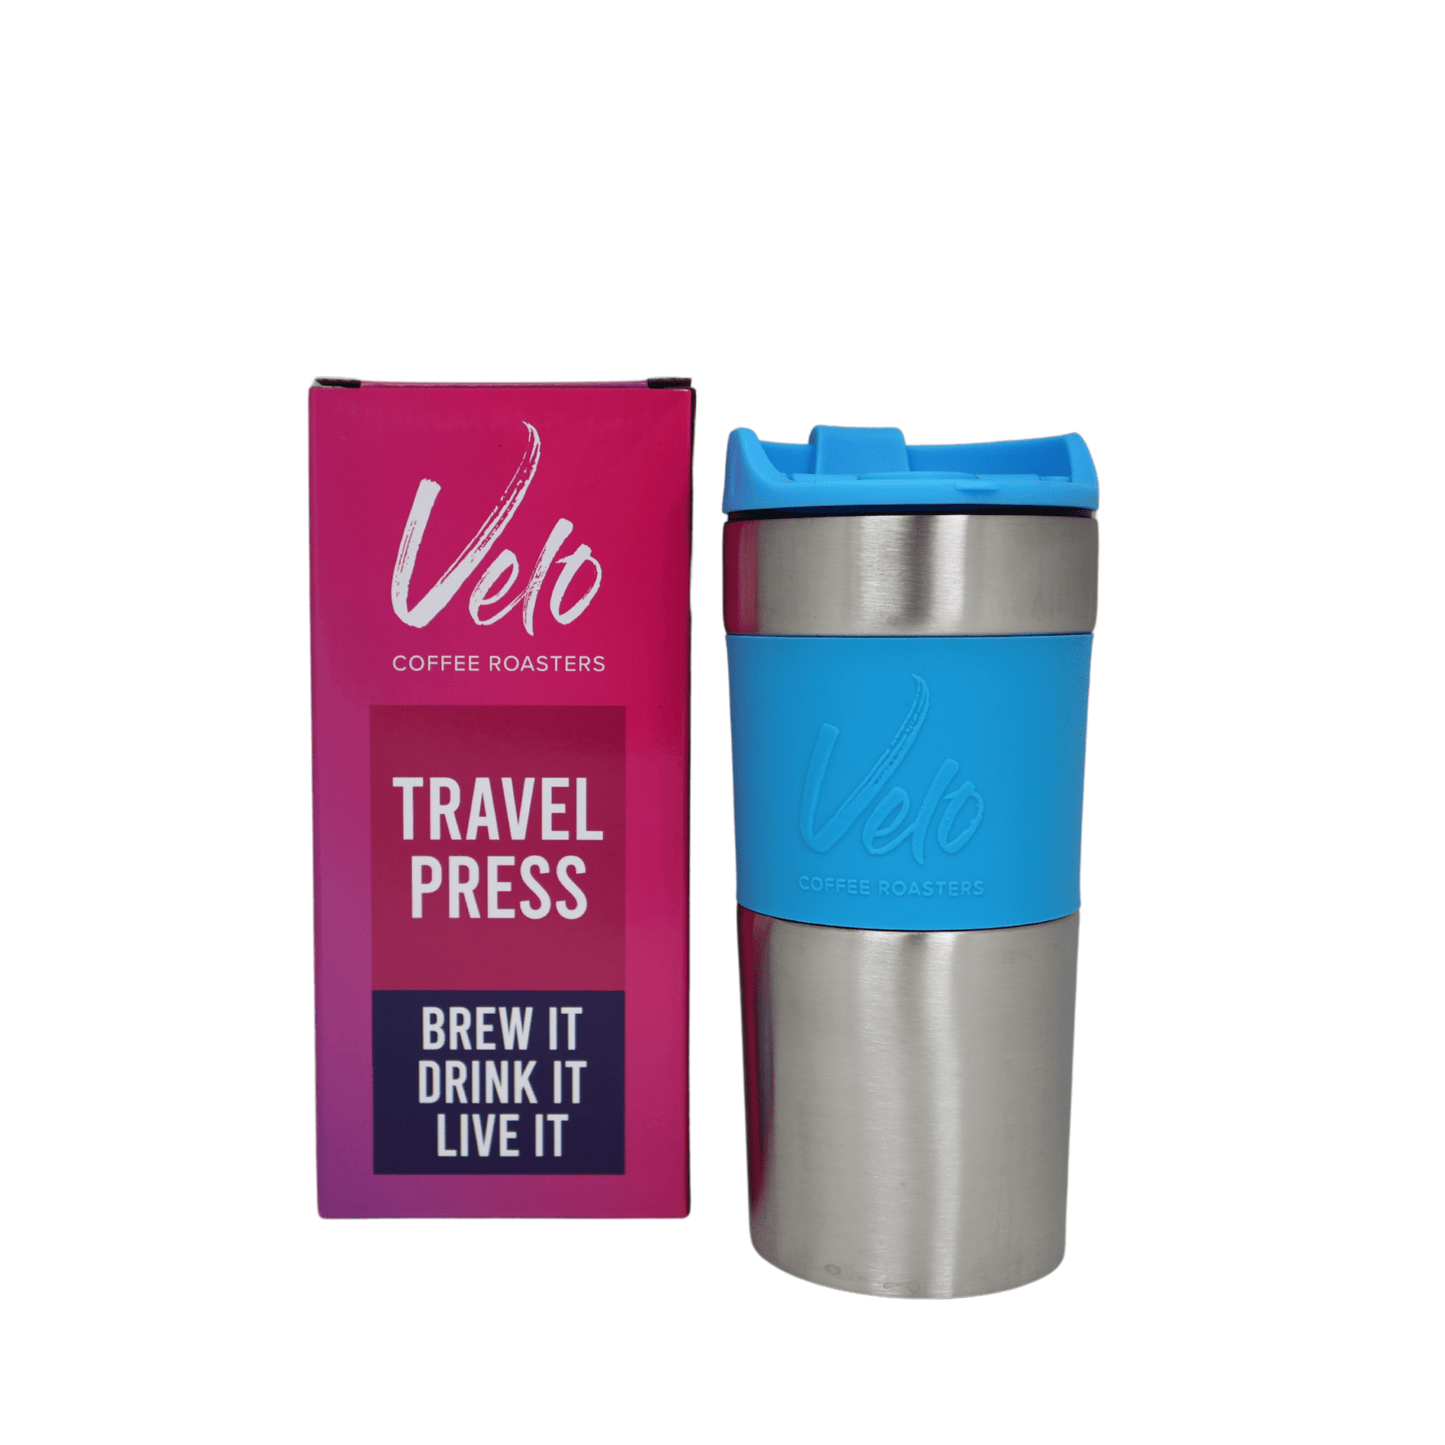 Travel Press - Velo Coffee Roasters